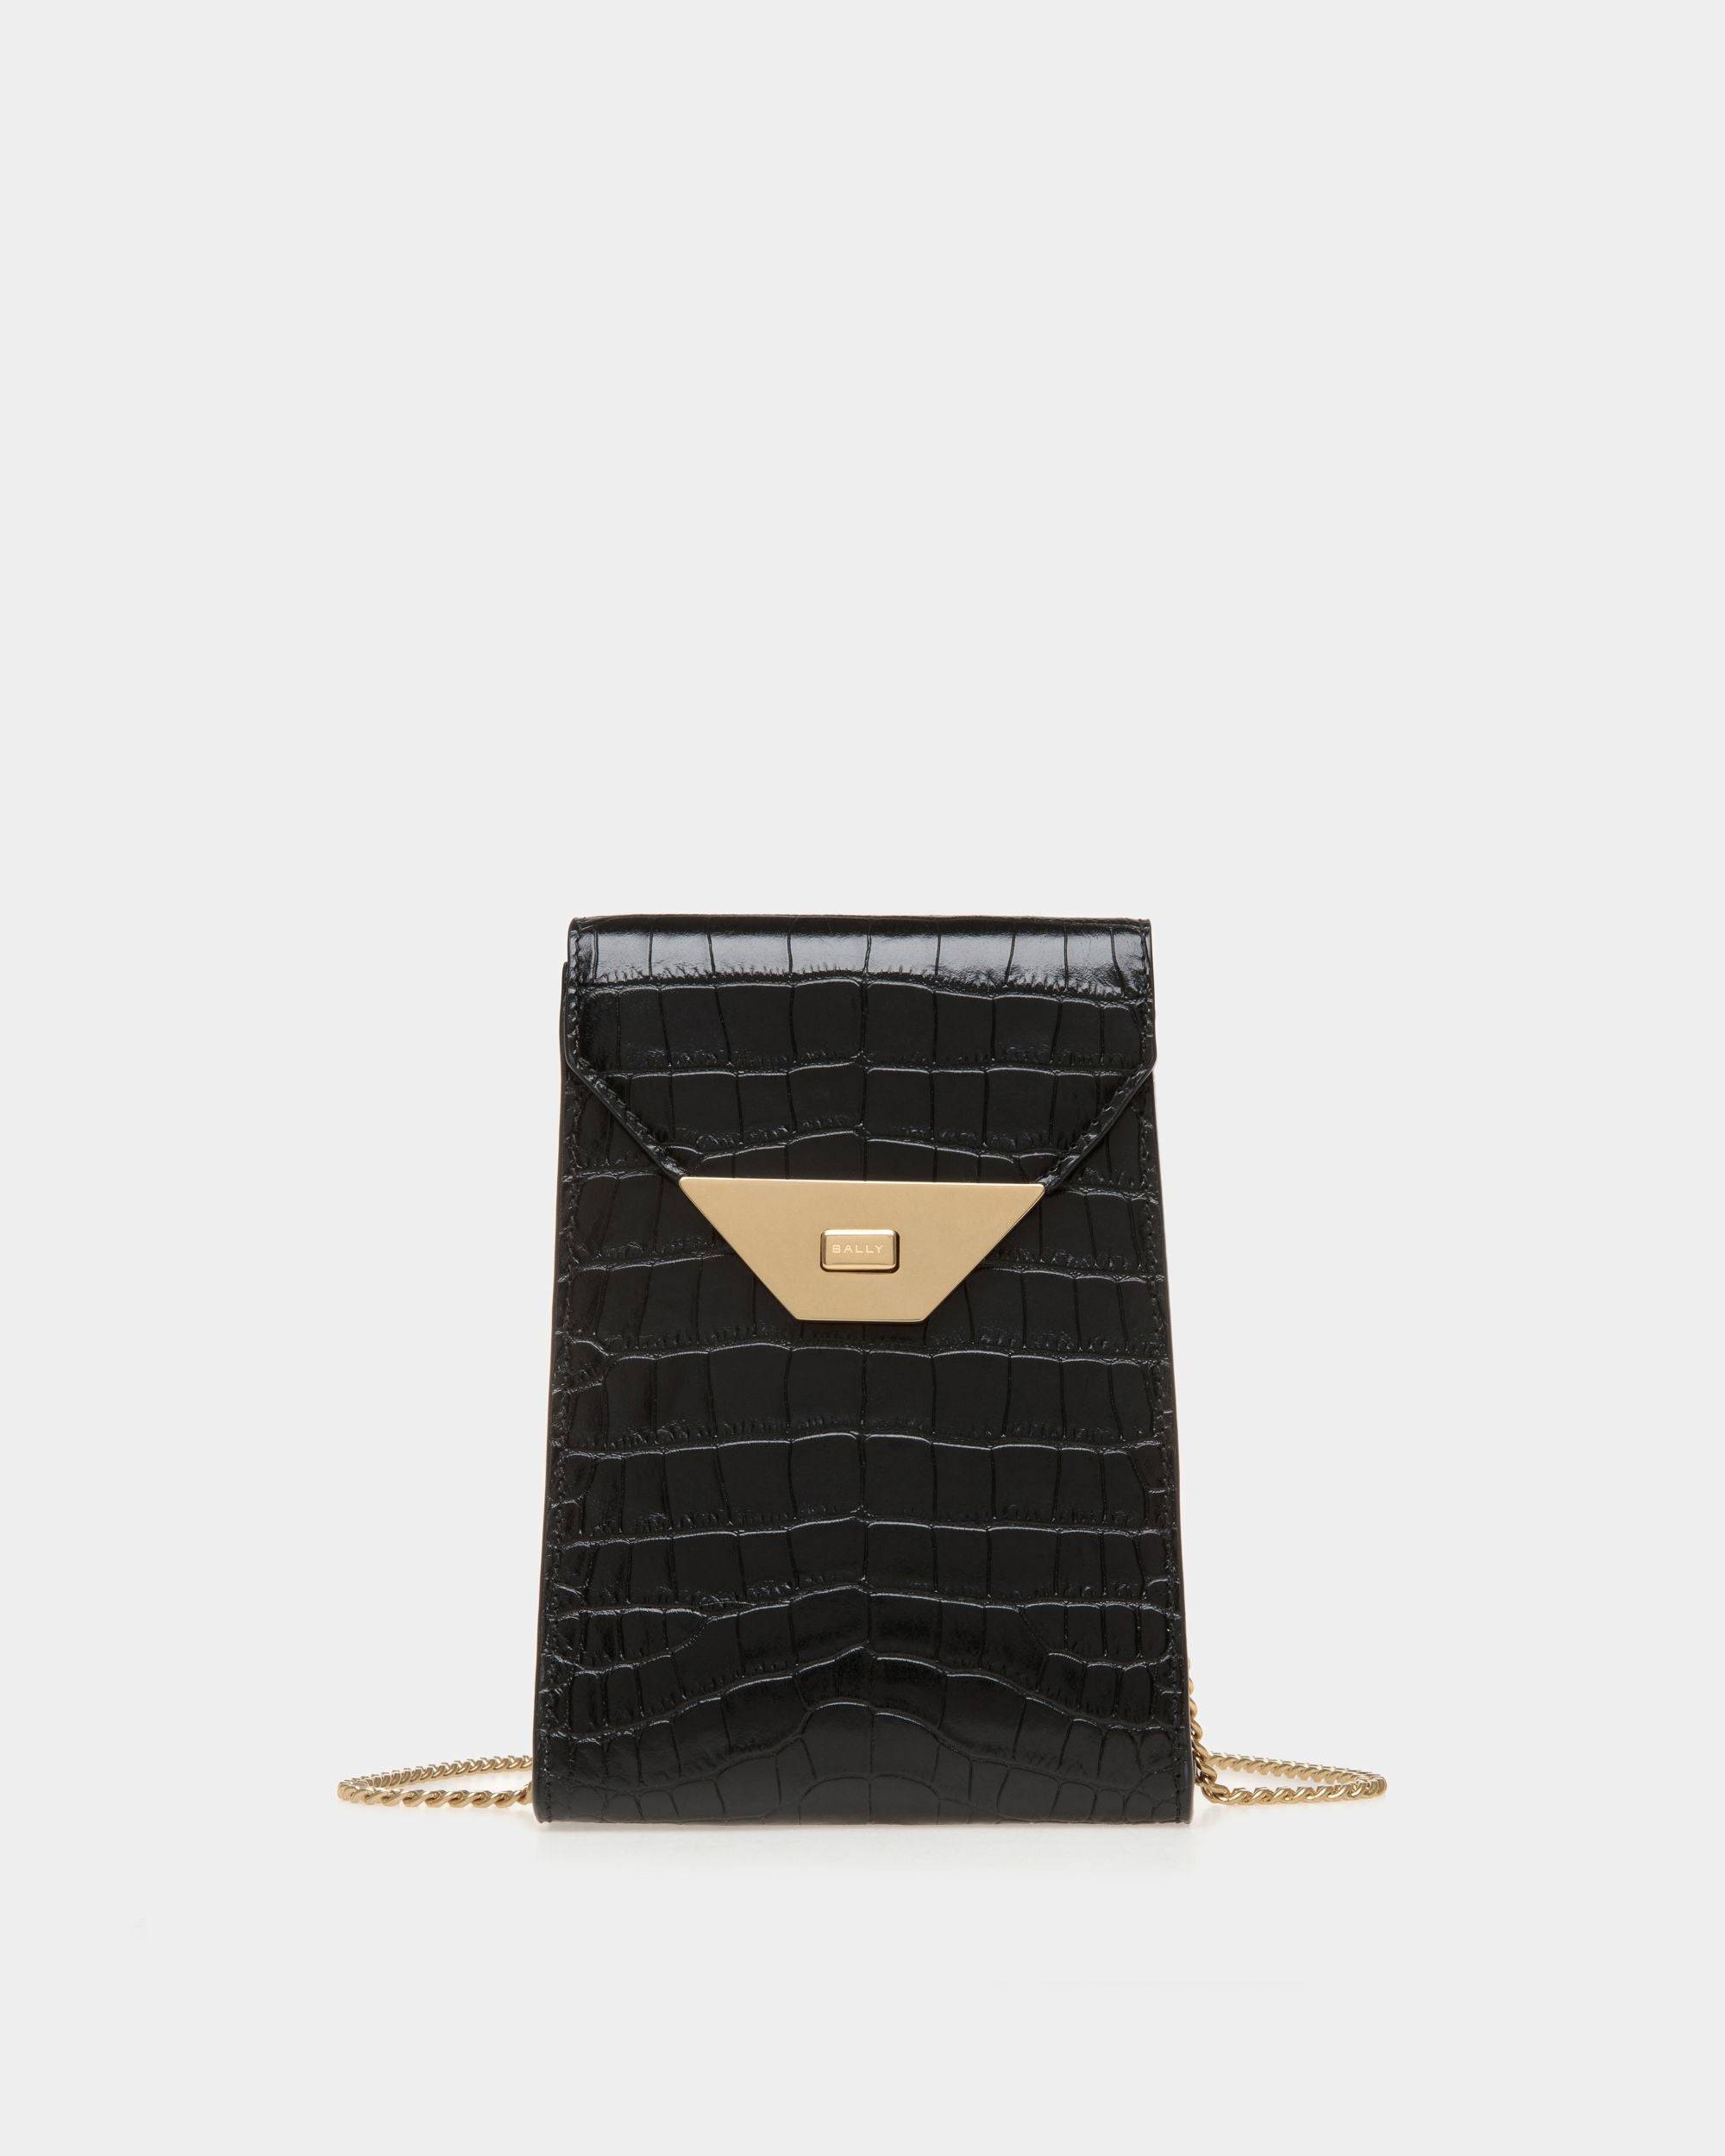 Women's Tilt Phone Bag in Black Crocodile Print Leather | Bally | Still Life Front